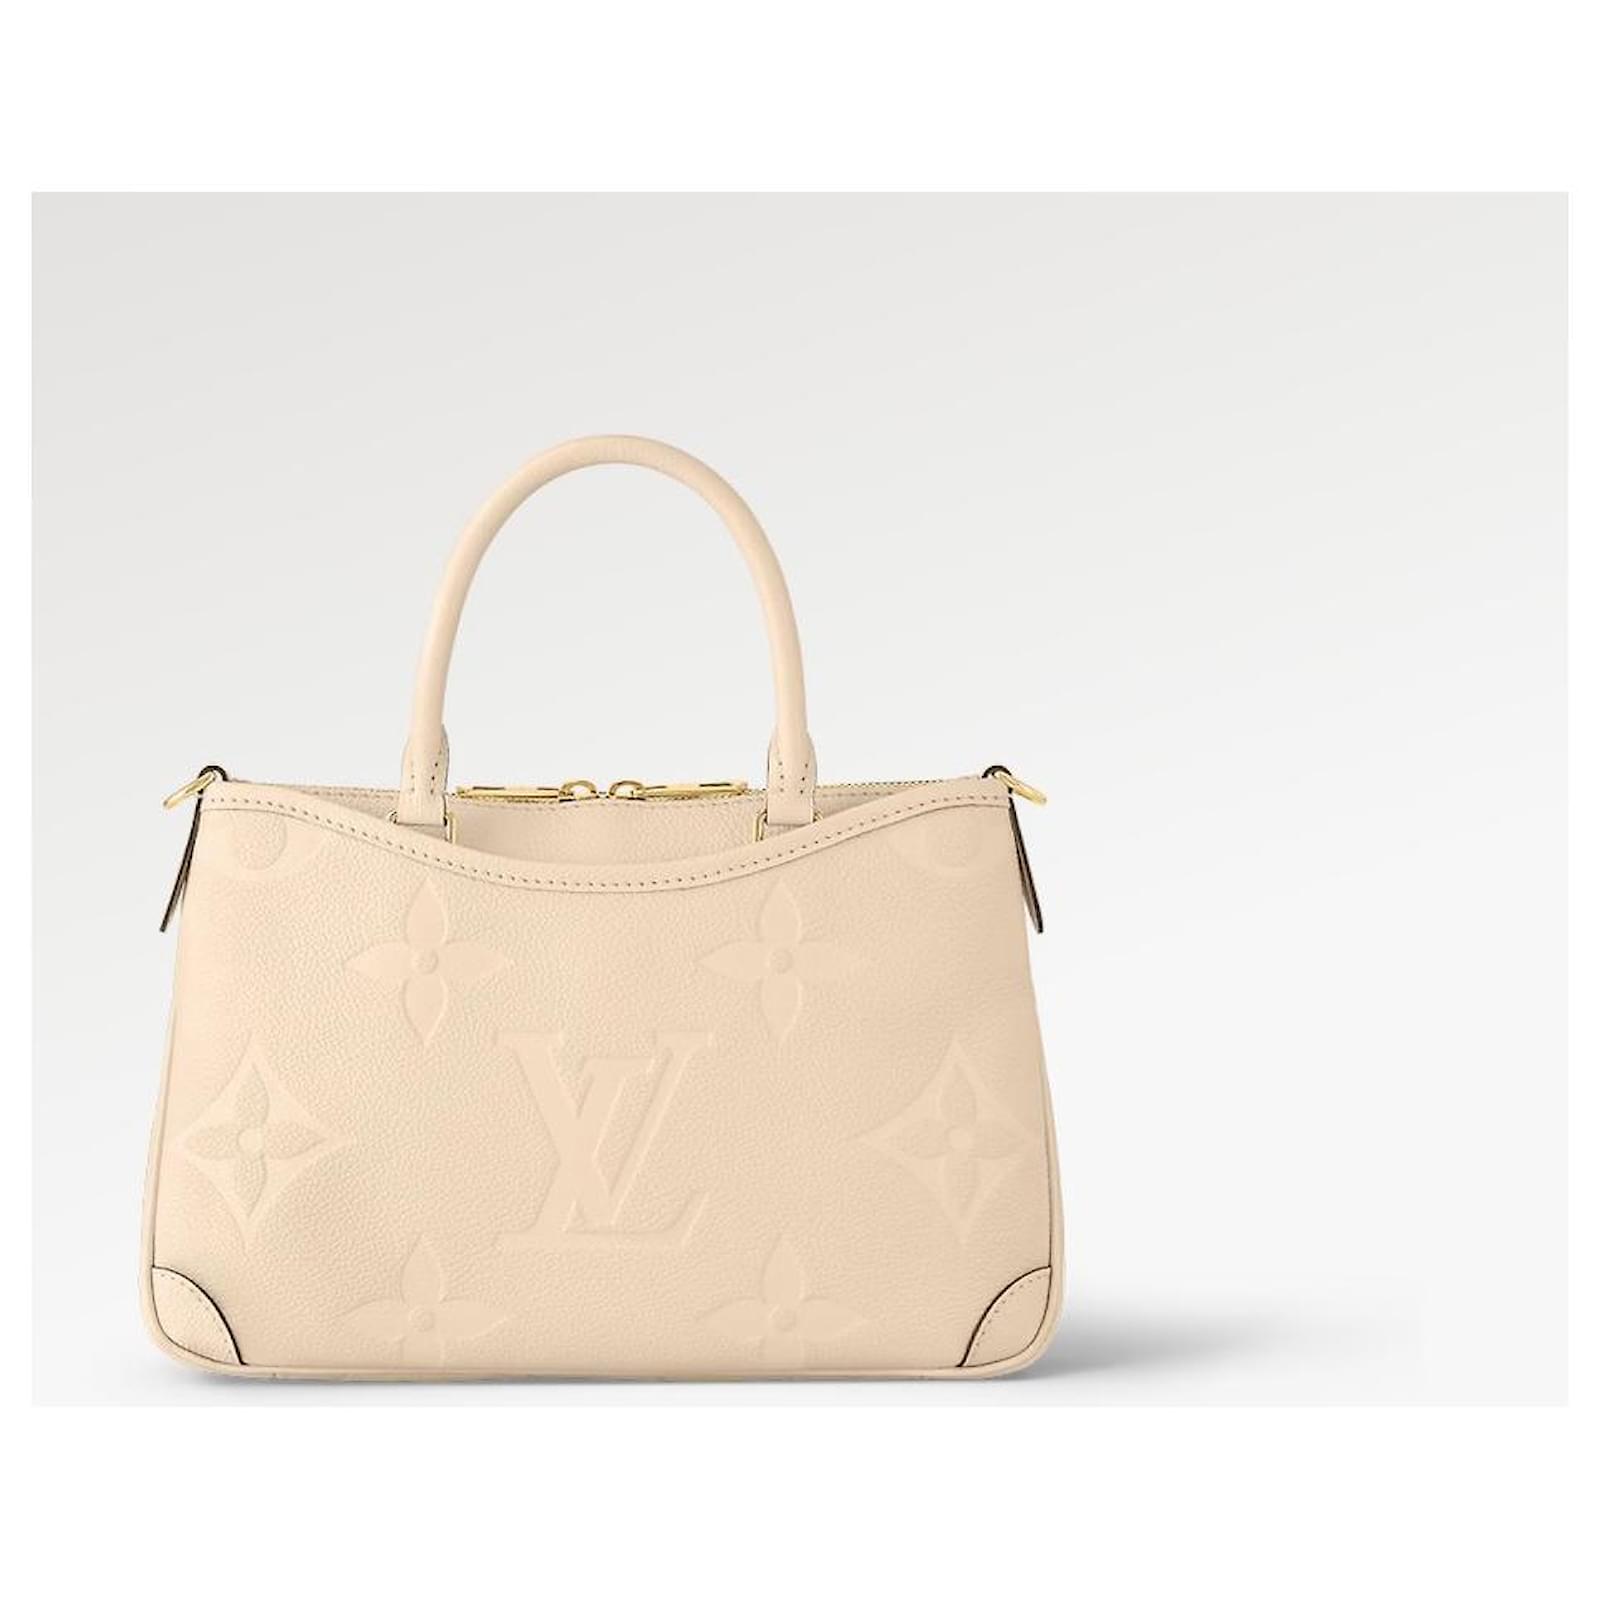 Louis Vuitton Bagatelle shoulder bag in Trianon pink and cream color  empreinte monogram leather